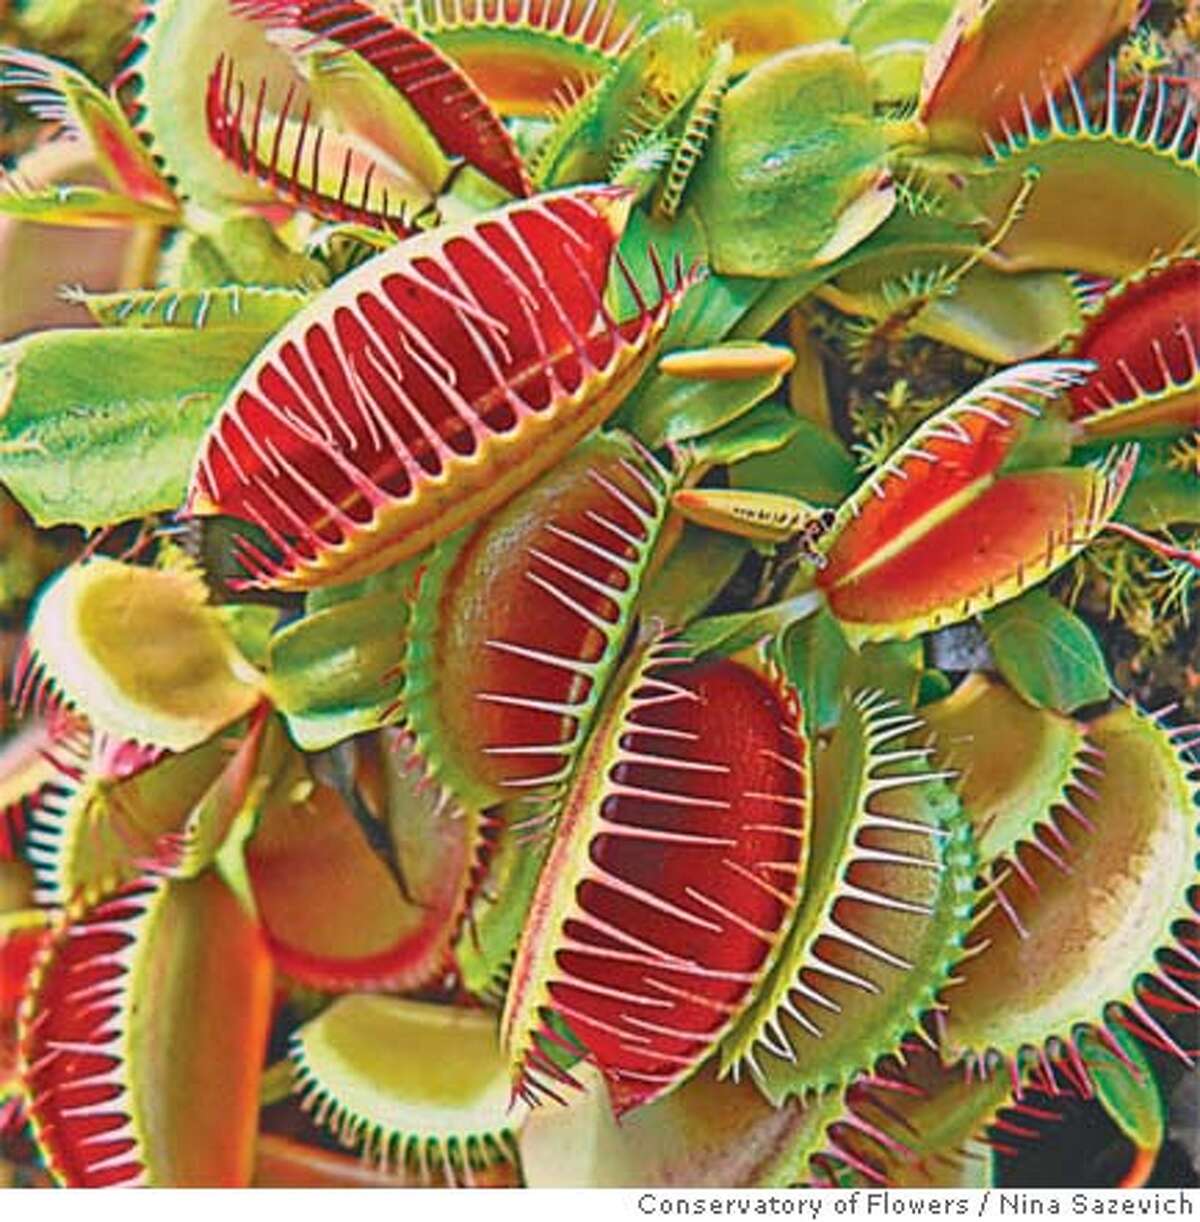 ThisVenus flytrap lives in the big bog at the San Francisco Conservatory of Flowers